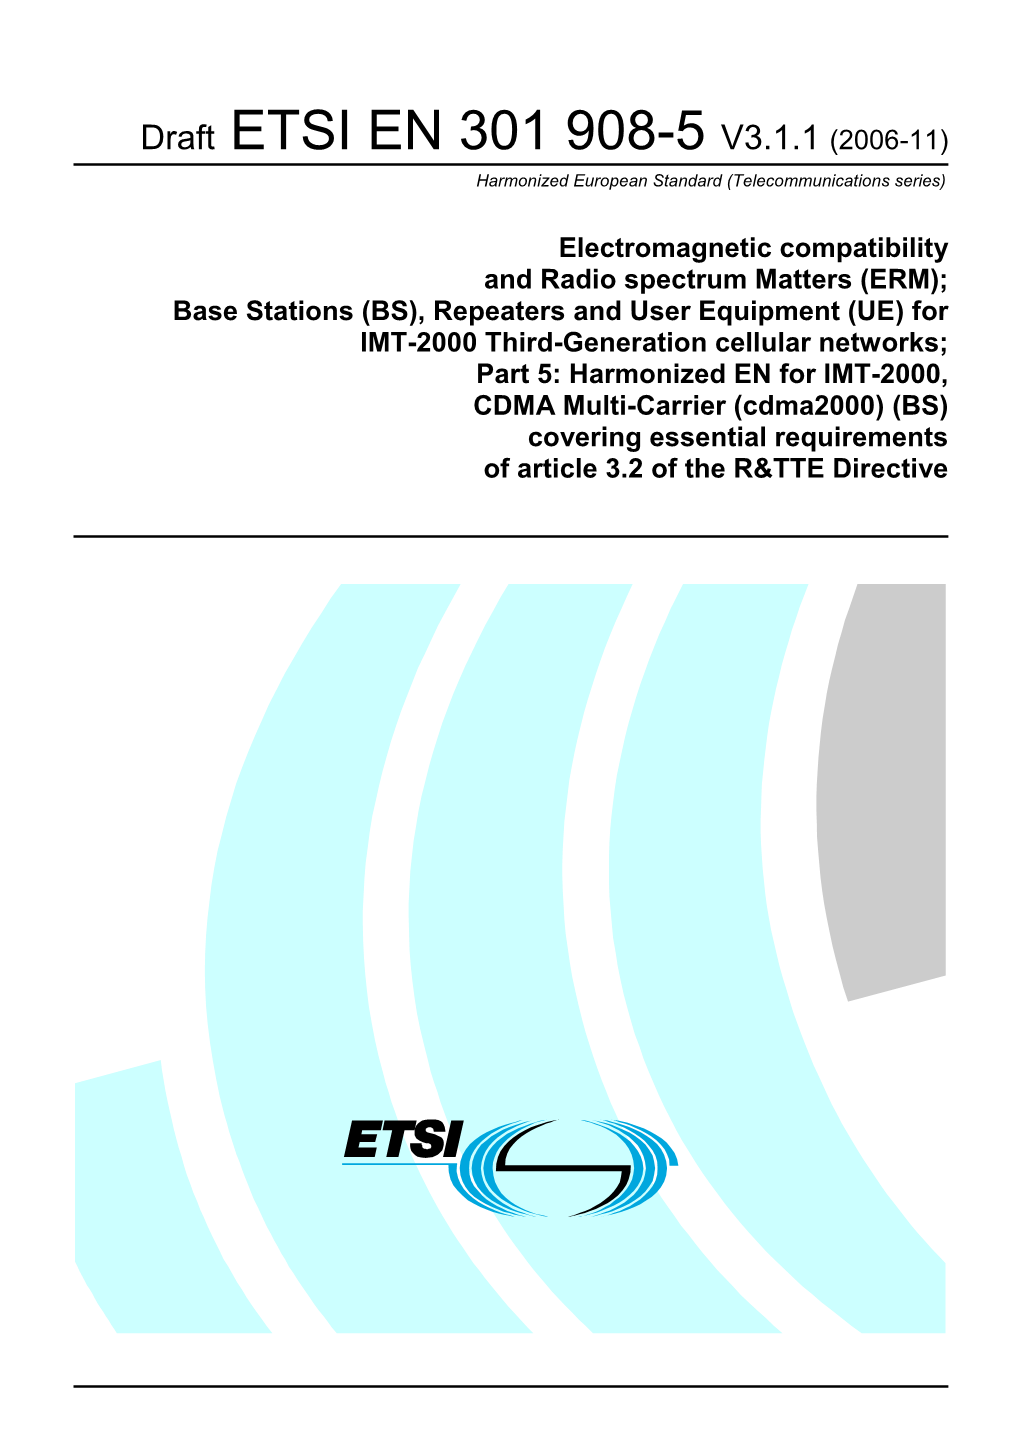 EN 301 908-5 V3.1.1 (2006-11) Harmonized European Standard (Telecommunications Series)